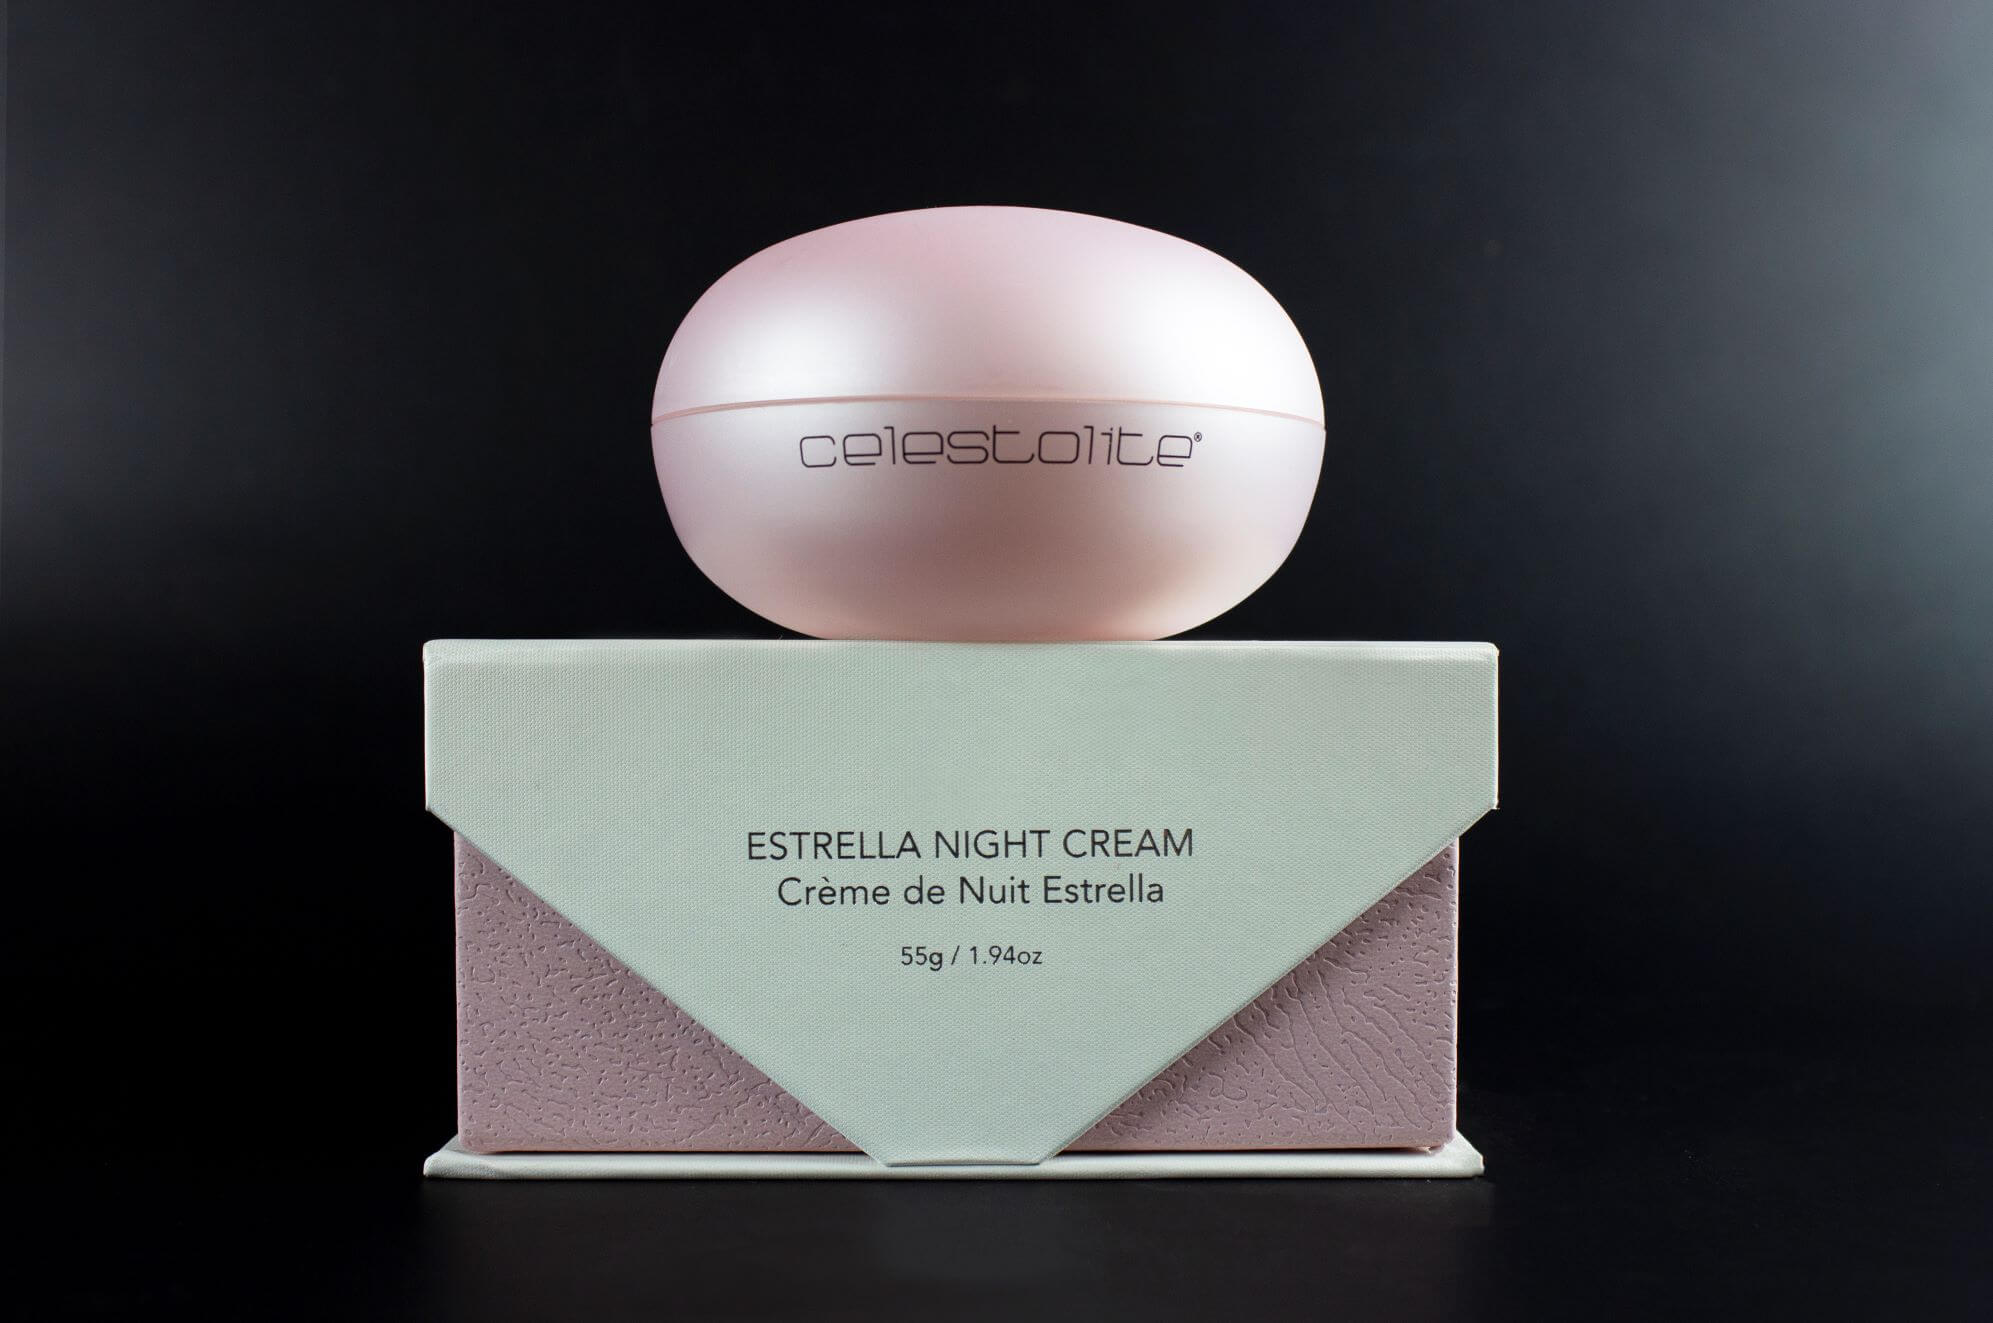 Estrella Night Cream